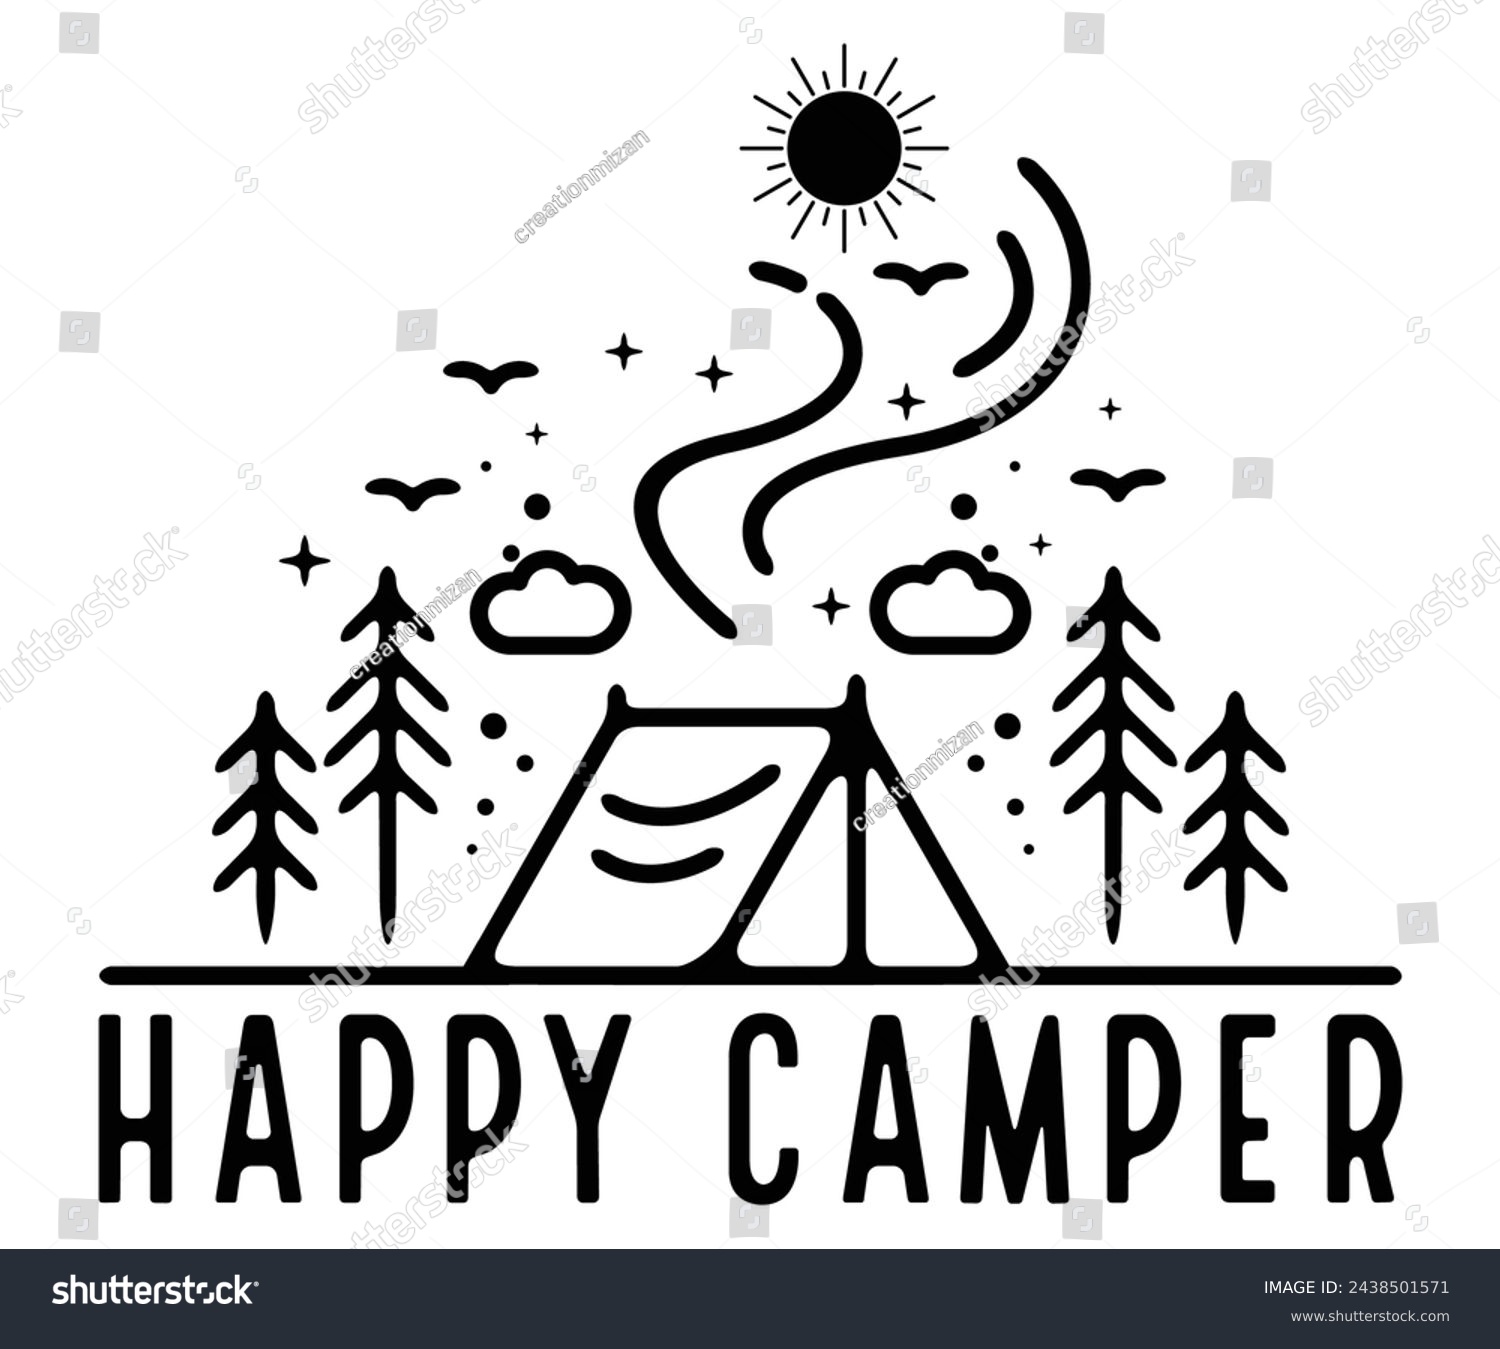 SVG of Happy camper Svg,Camping Svg,Hiking,Funny Camping,Adventure,Summer Camp,Happy Camper,Camp Life,Camp Saying,Camping Shirt svg